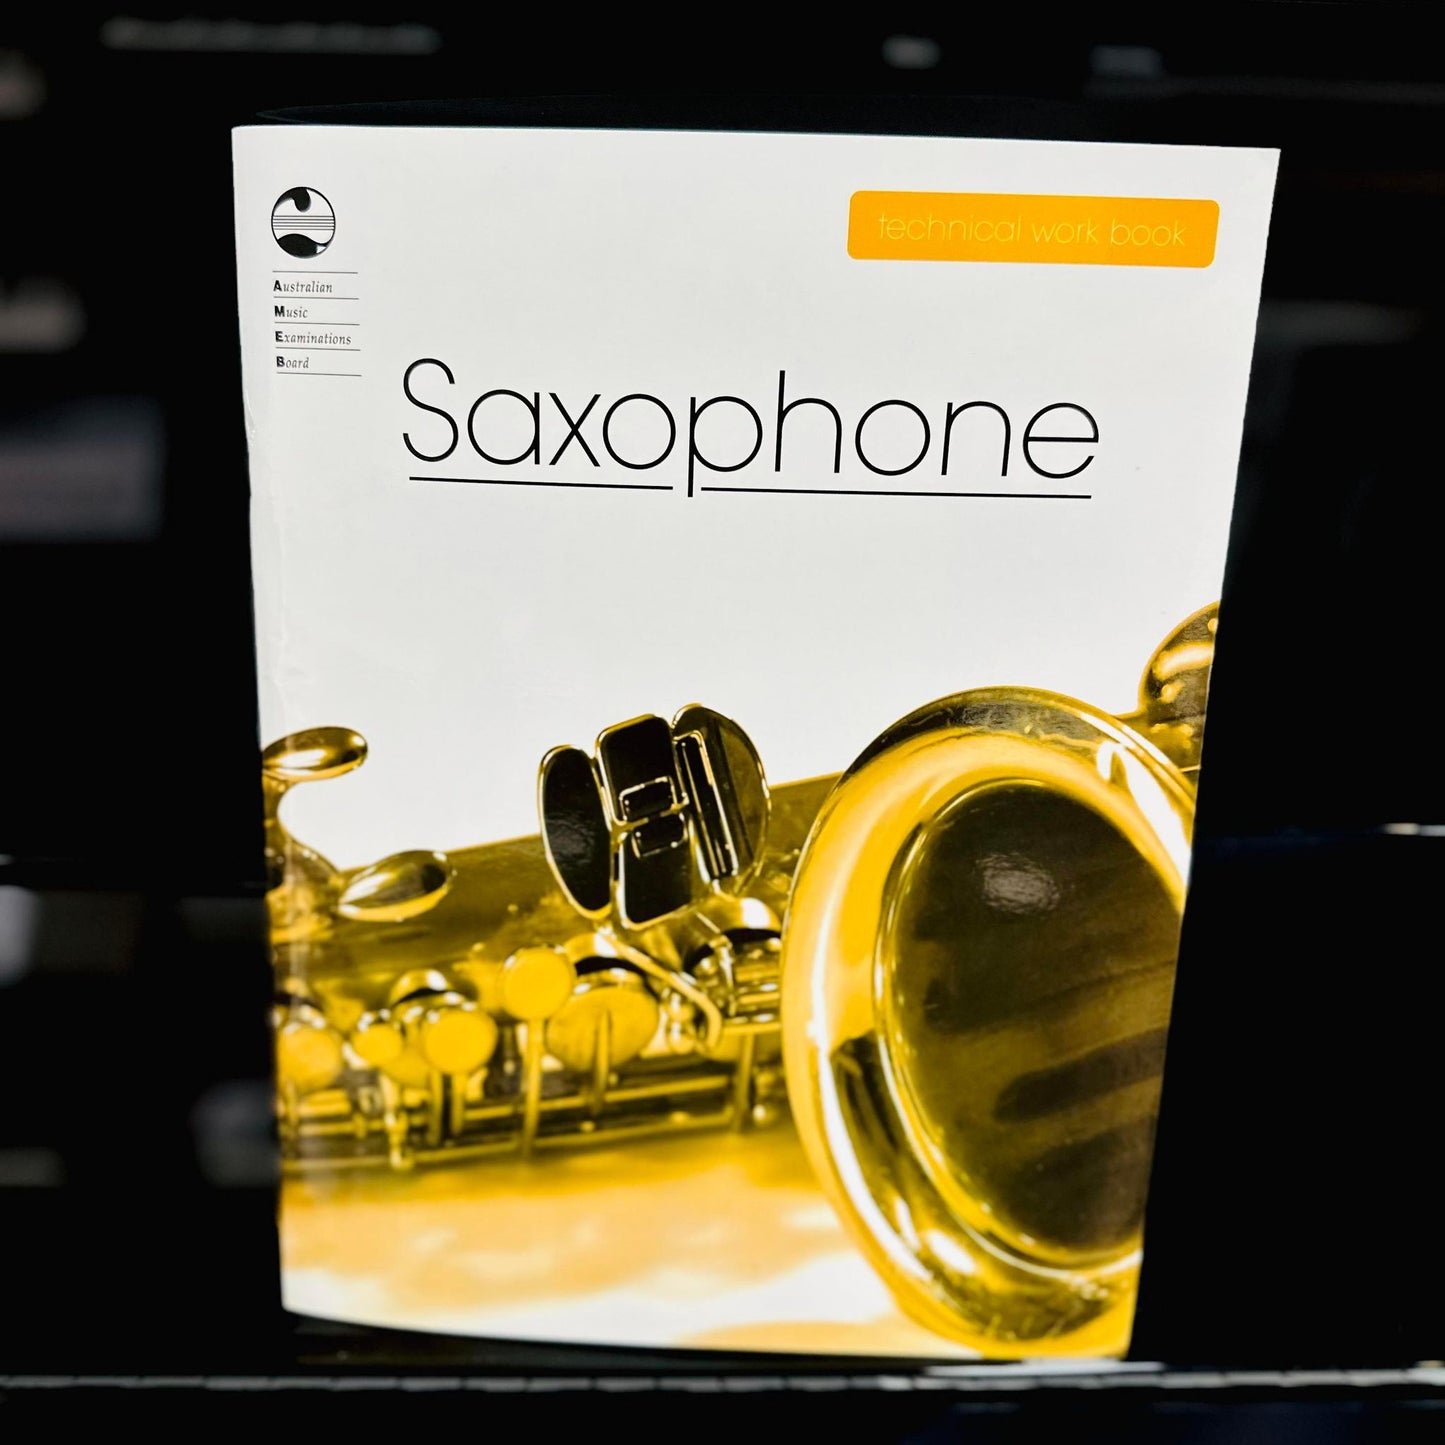 AMEB Saxophone Series 2